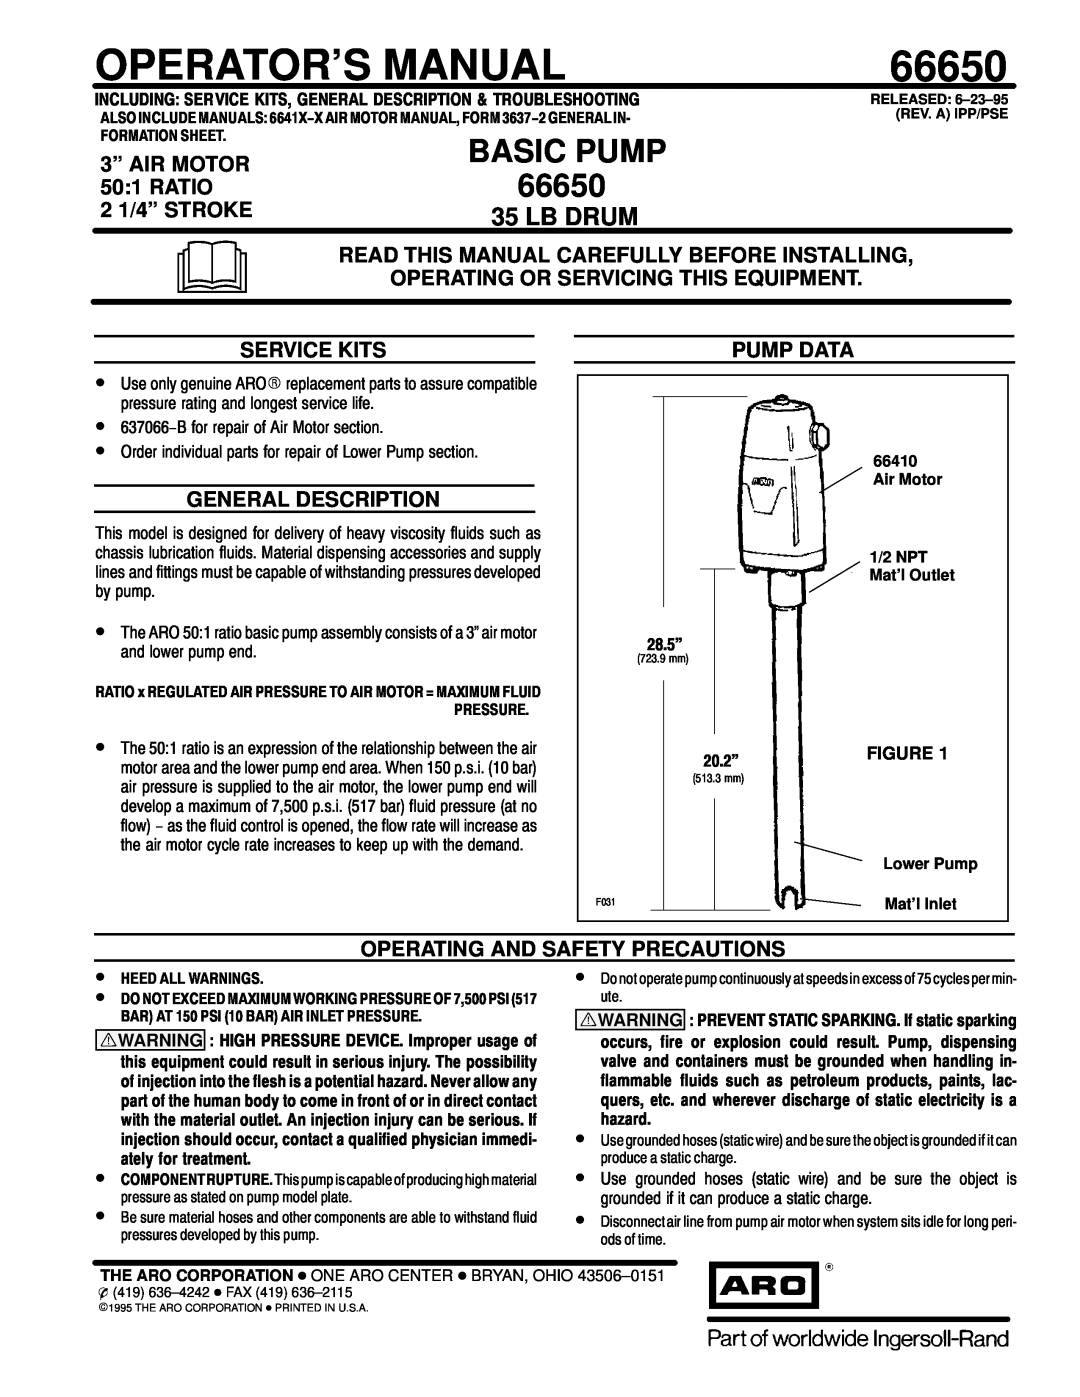 Ingersoll-Rand 66650 manual 3” AIR MOTOR, Ratio, 2 1/4” STROKE, Read This Manual Carefully Before Installing, Pump Data 